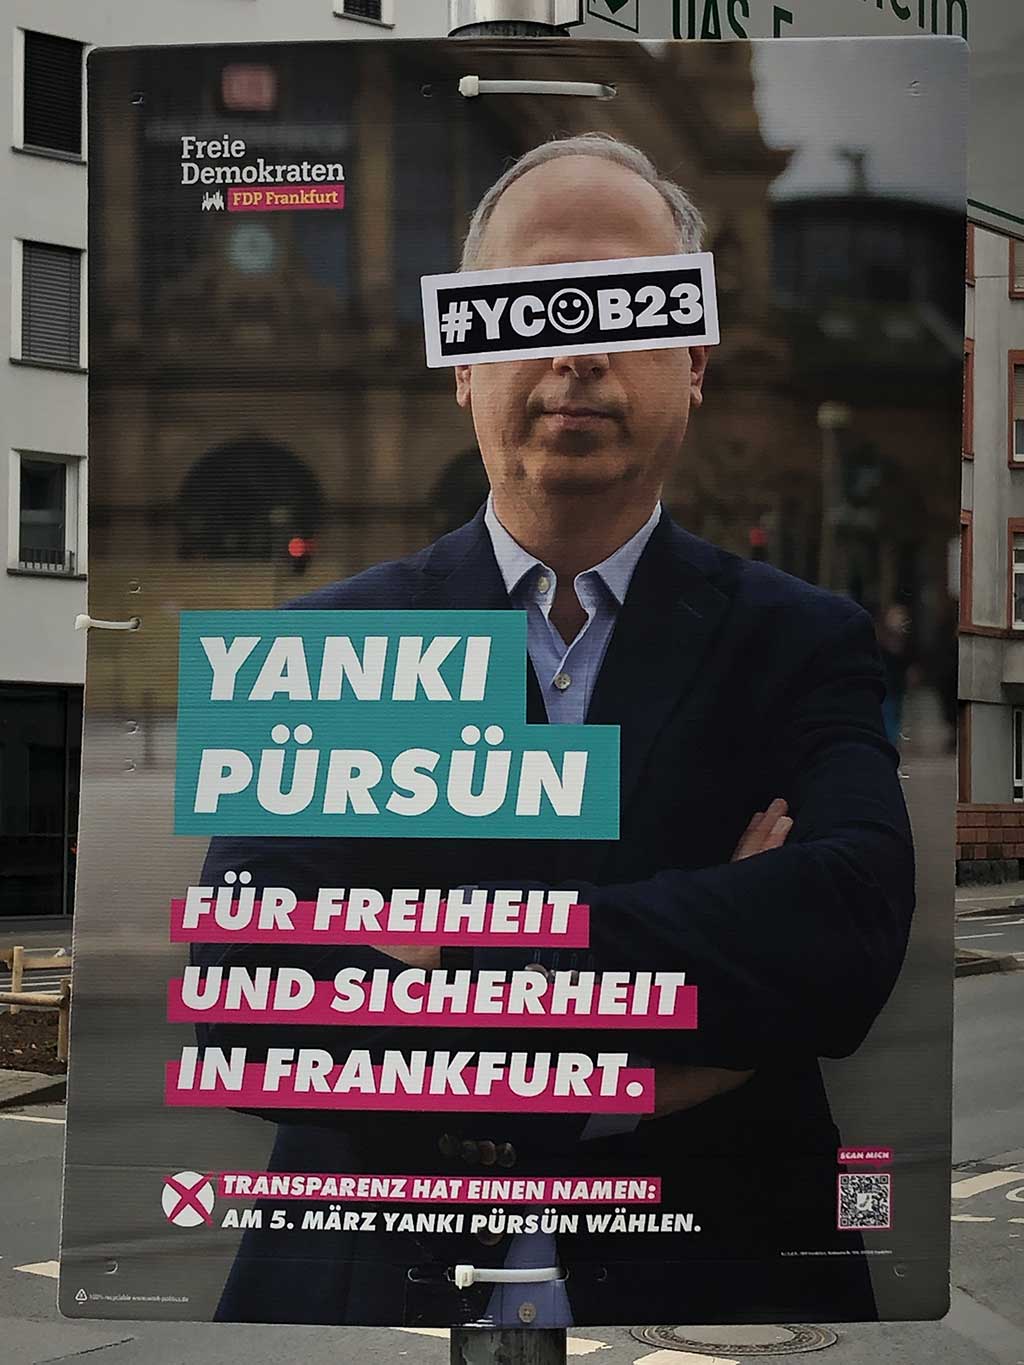 Mit #YCOB23 überklebte Wahlplakate in Frankfurt